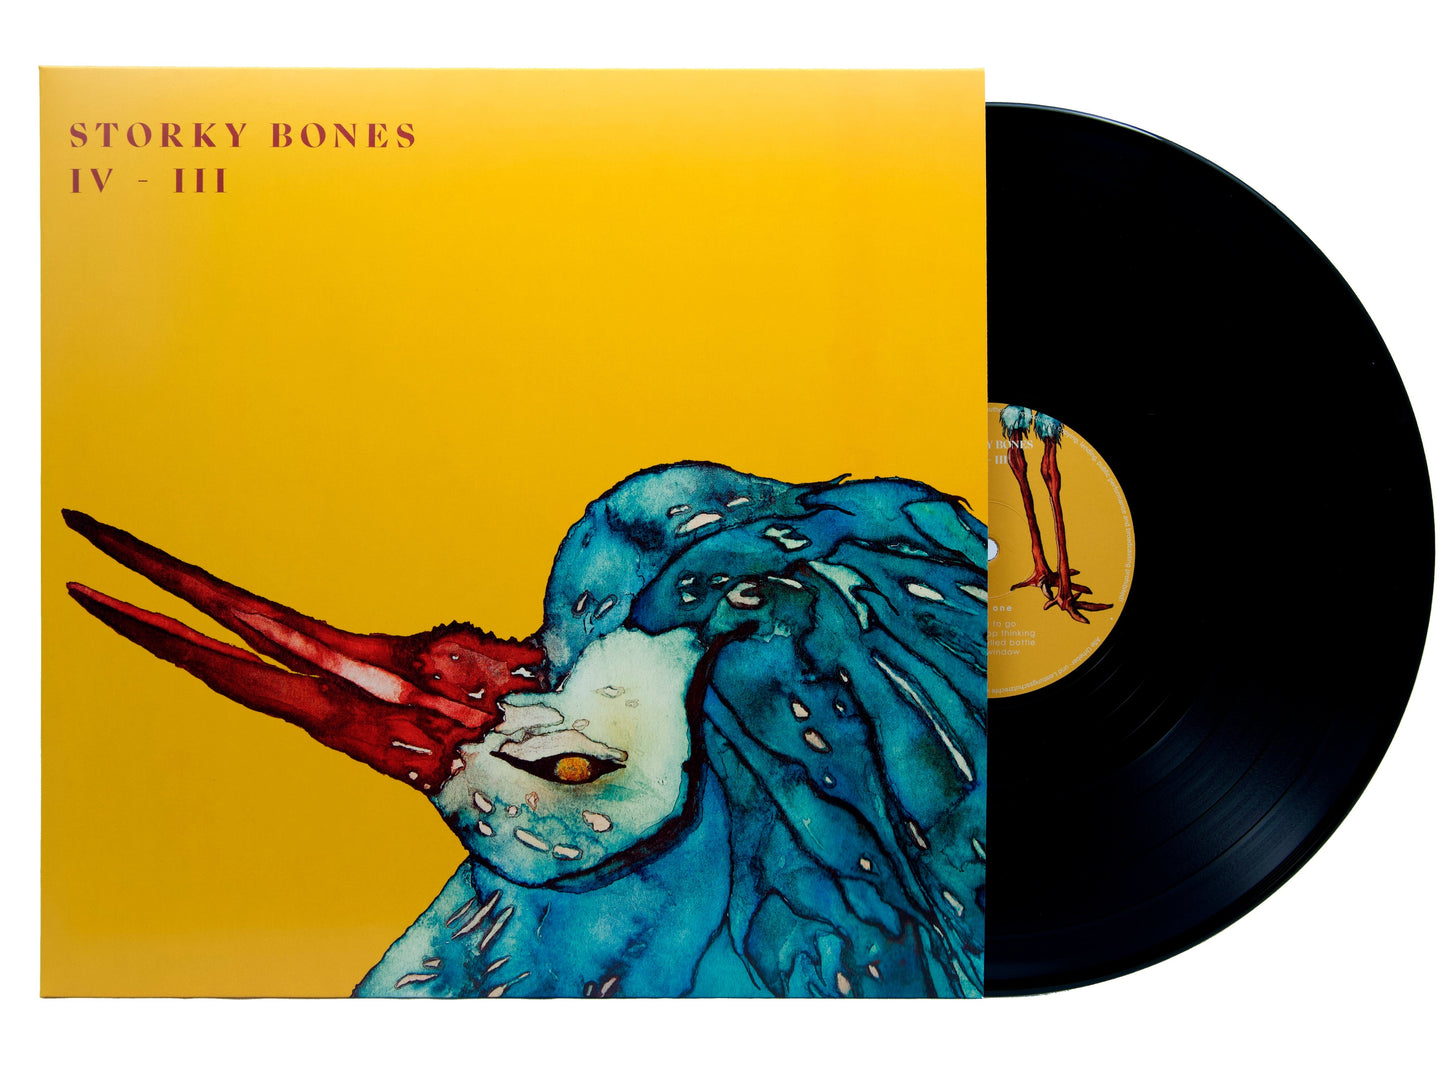 Copy of Storky Bones Album Vinyl "IV - III"